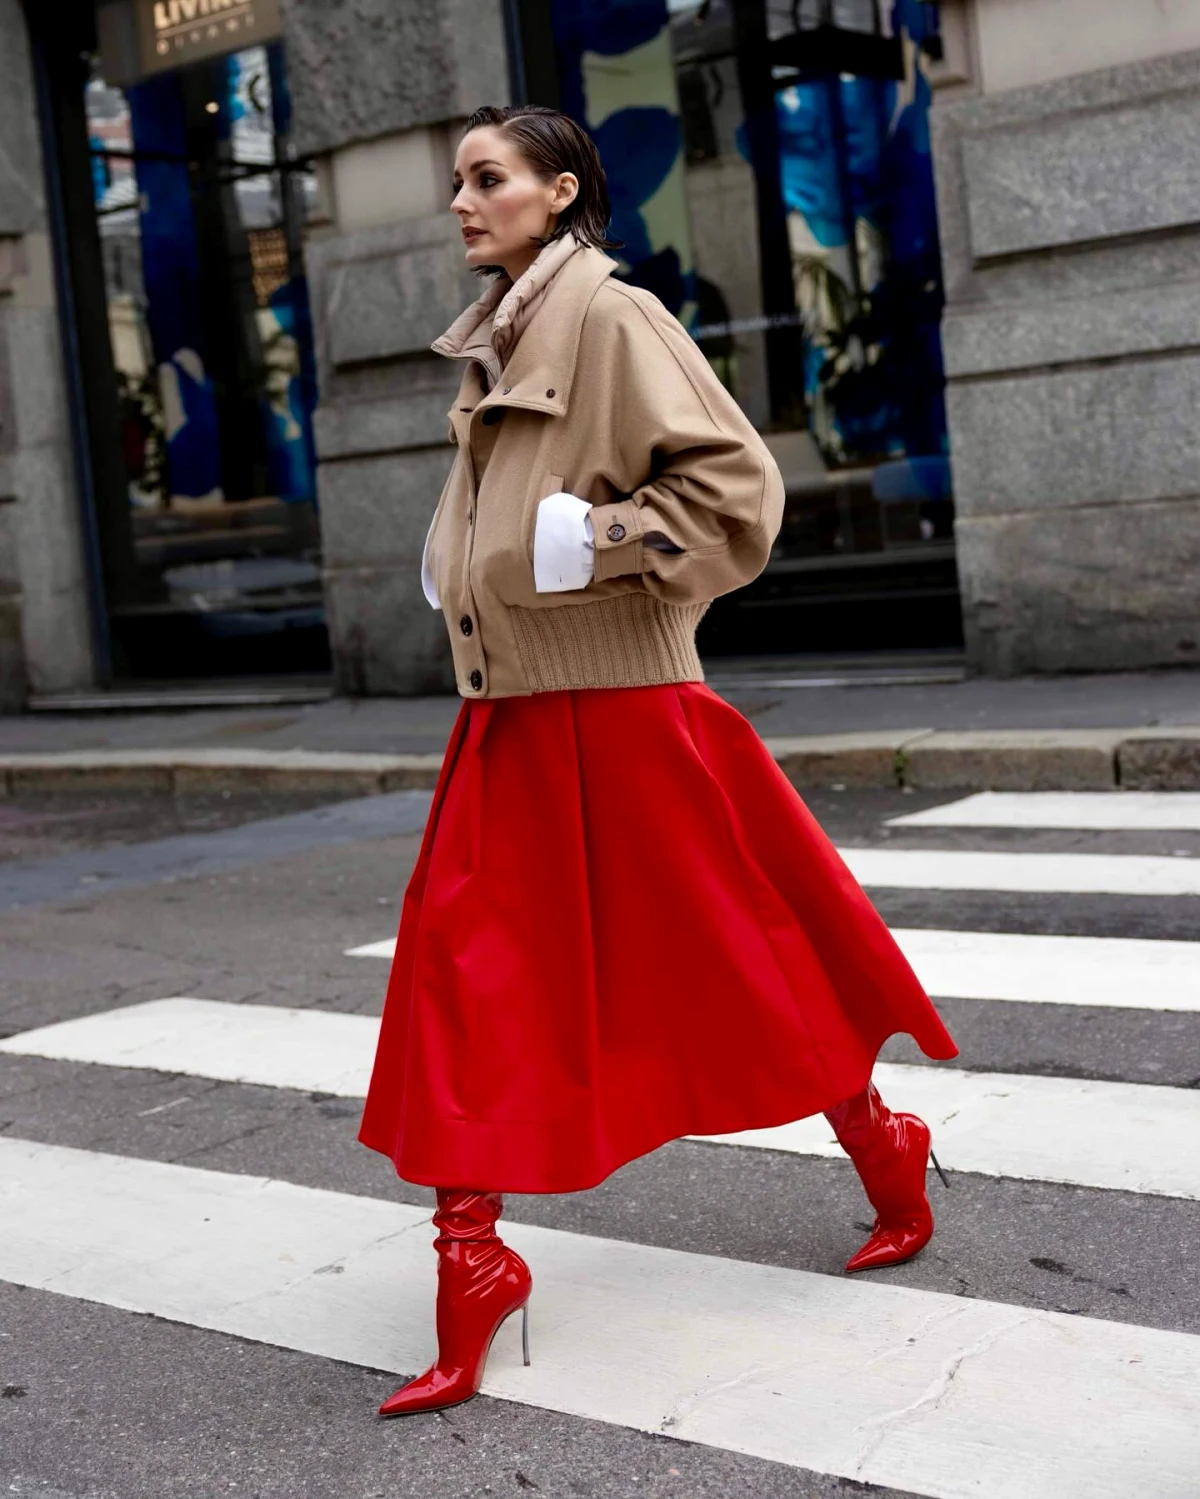 mode d emploie du style casual chic femme jupe et chaussures rouges